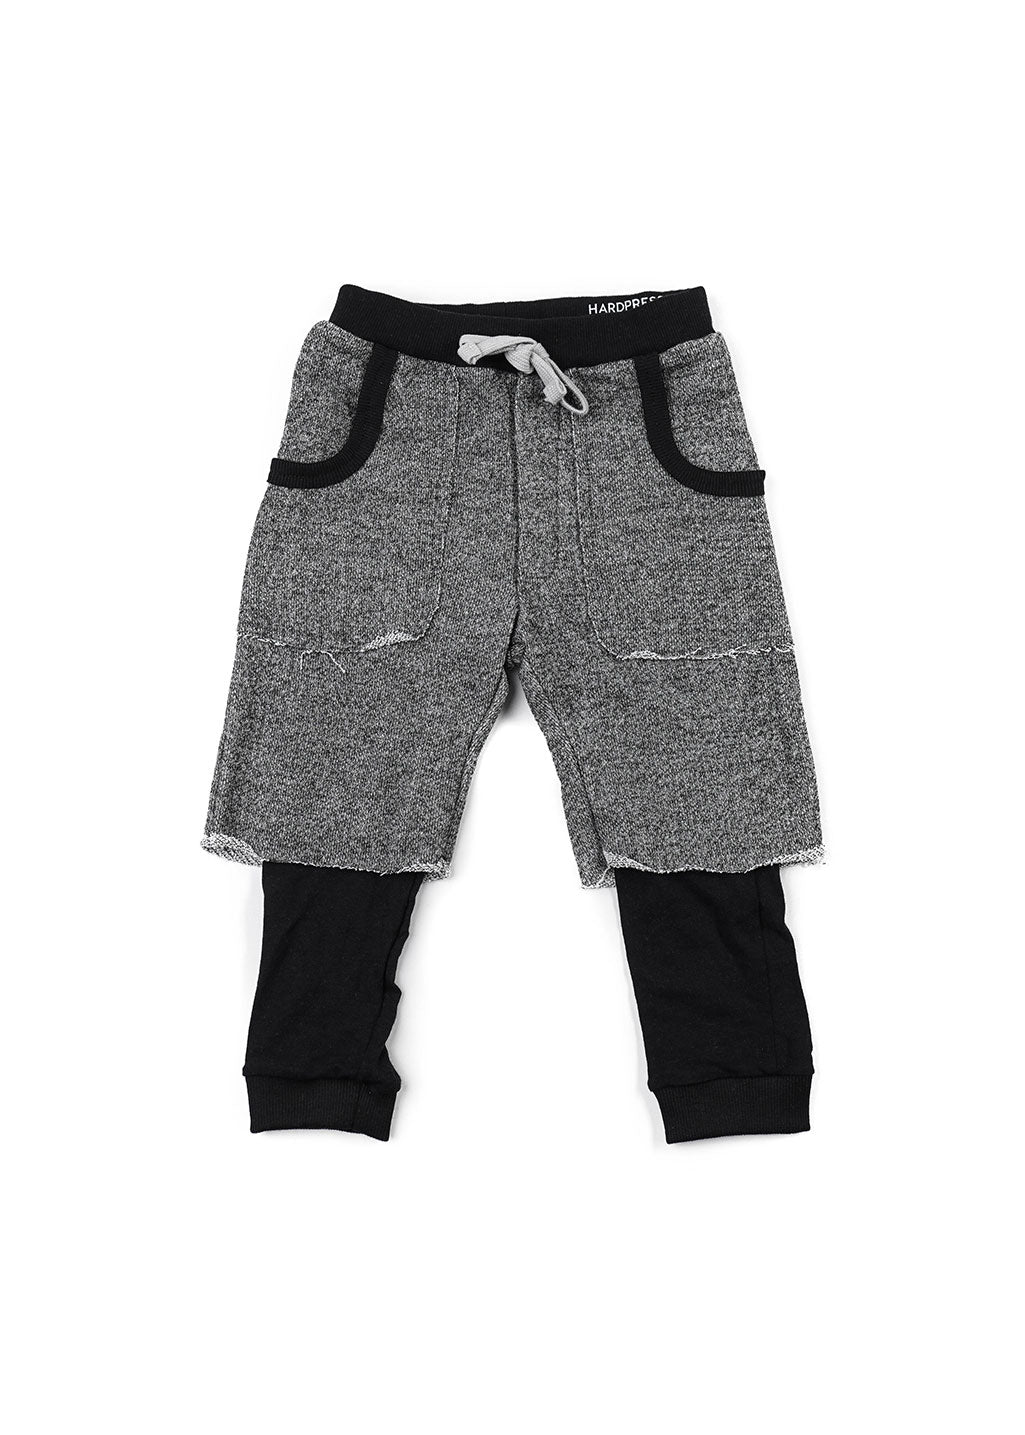 Jogger Shorts | Kids - Hardpressed Print Studio Inc.